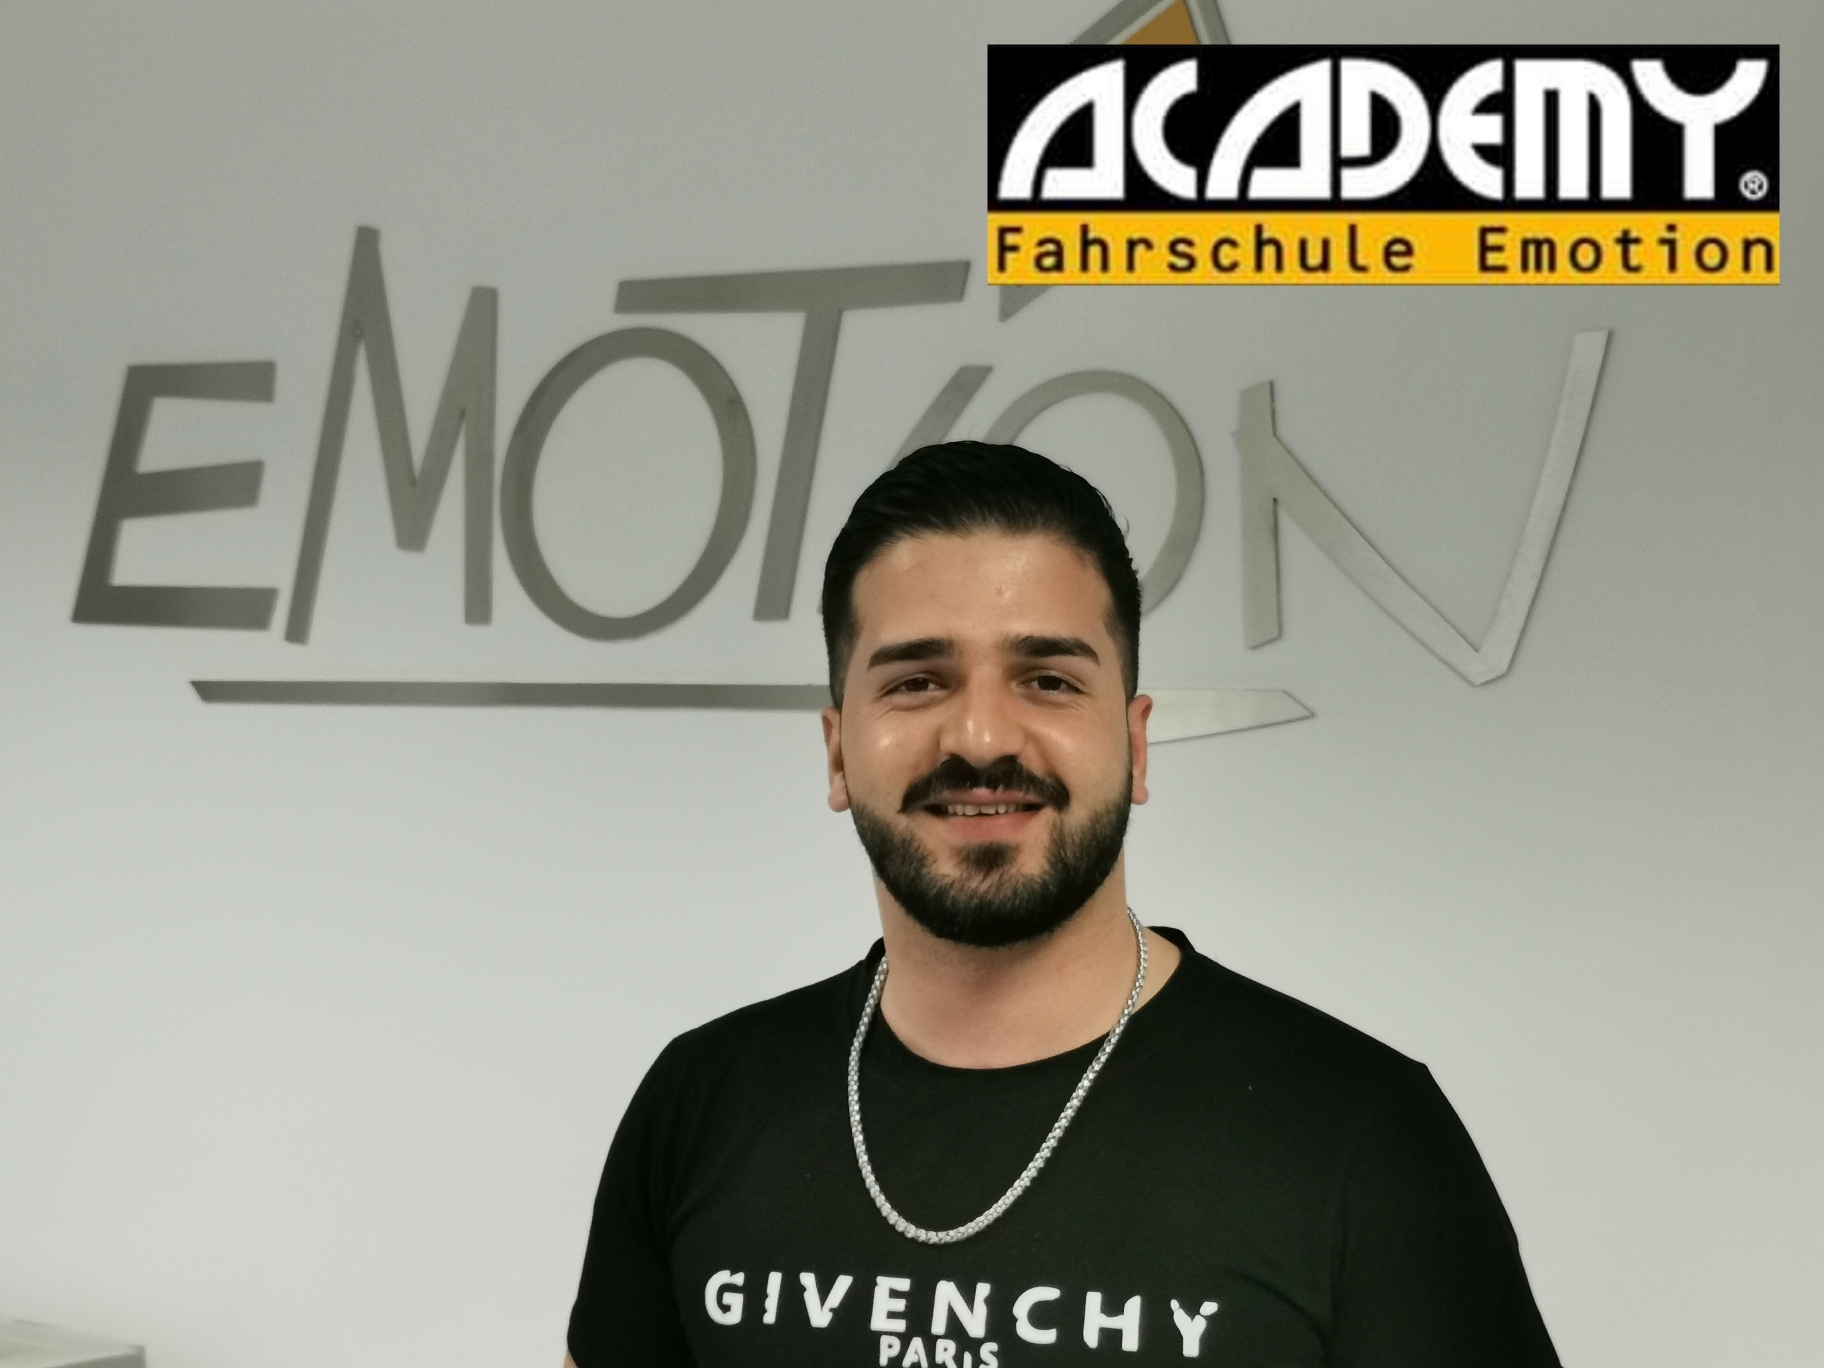 de.academy.fahrschulen.model.instructor.Instructor@ea24